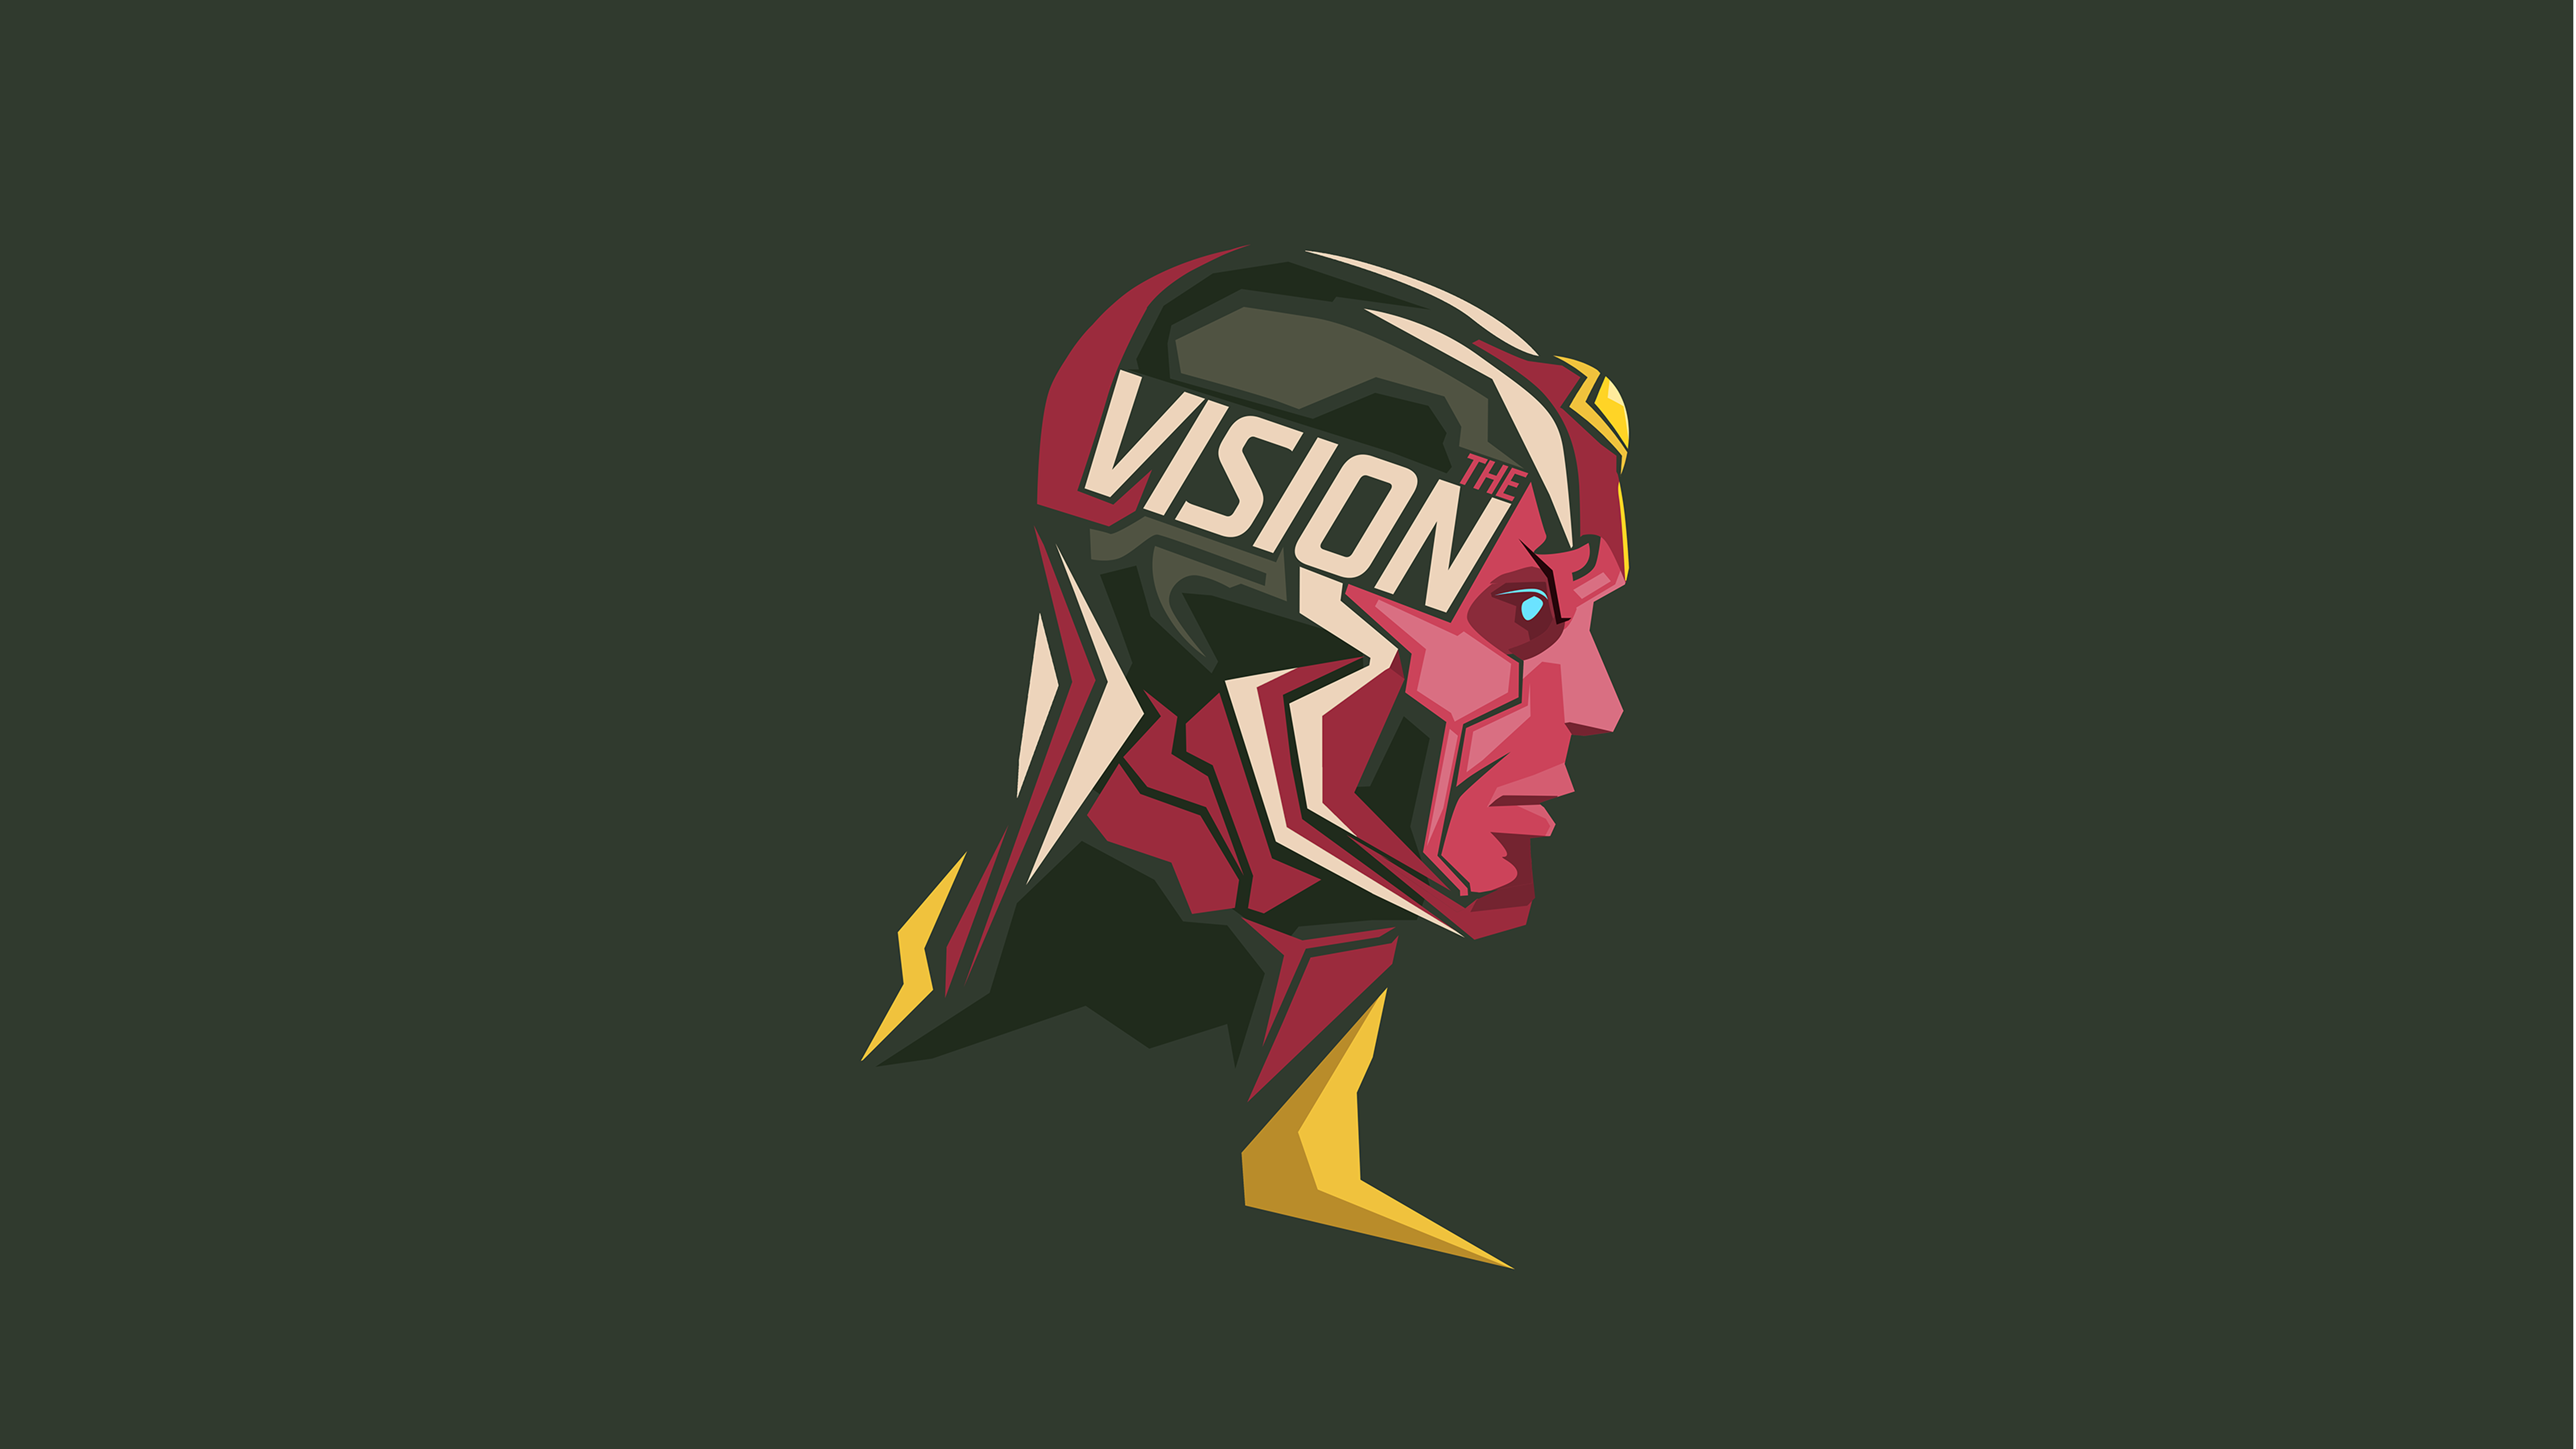 Comics Vision 8k Ultra HD Wallpaper by BossLogic